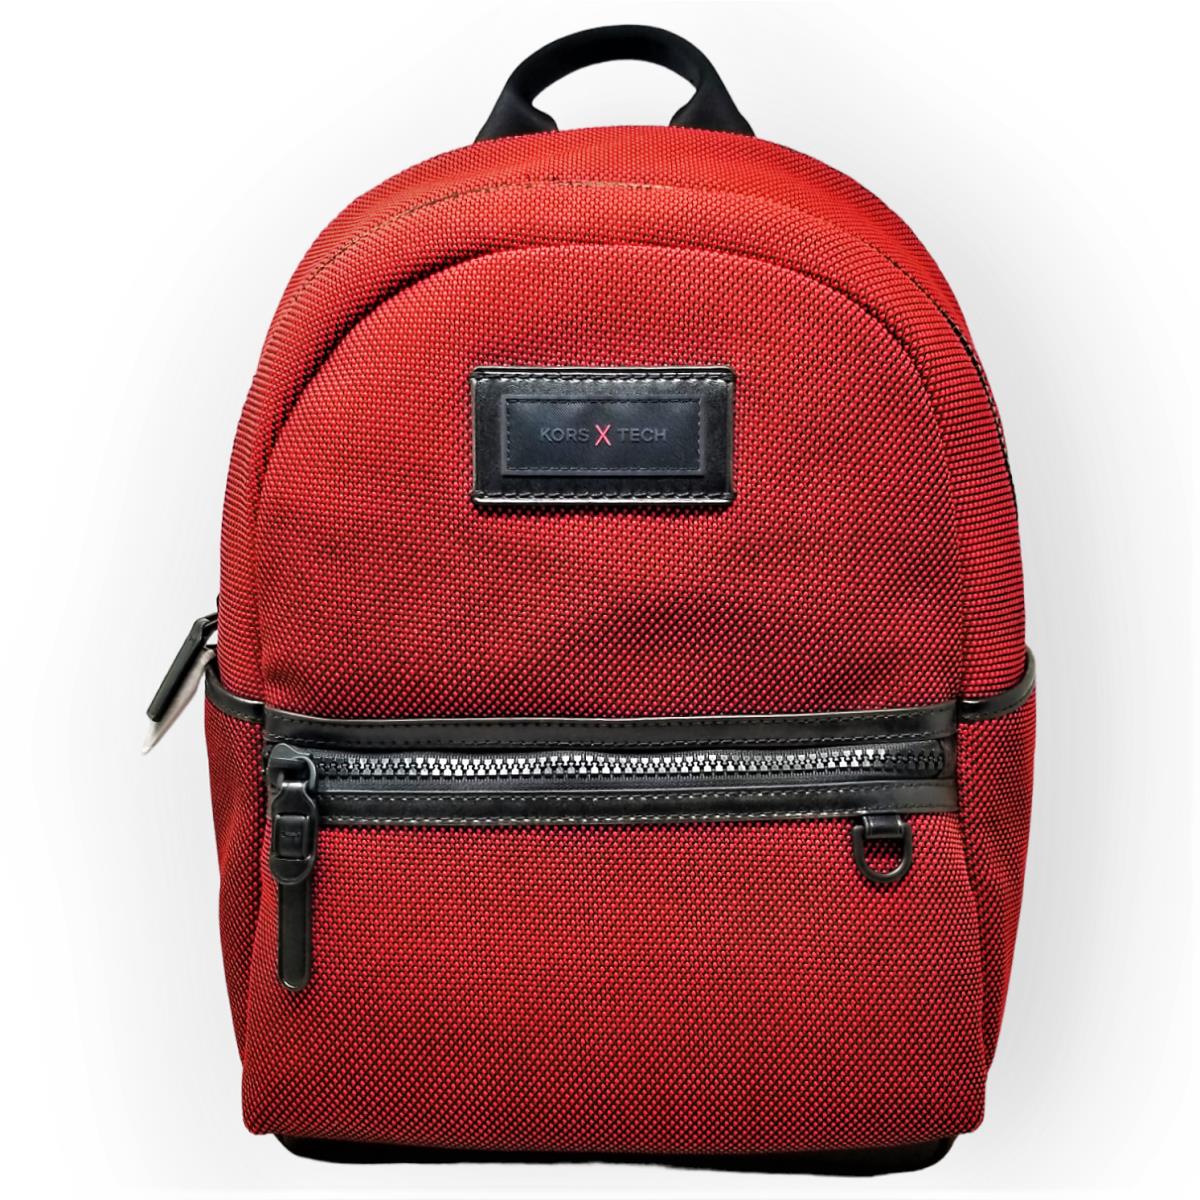 Michael Kors - Kors X Tech Backpack - Red / Black